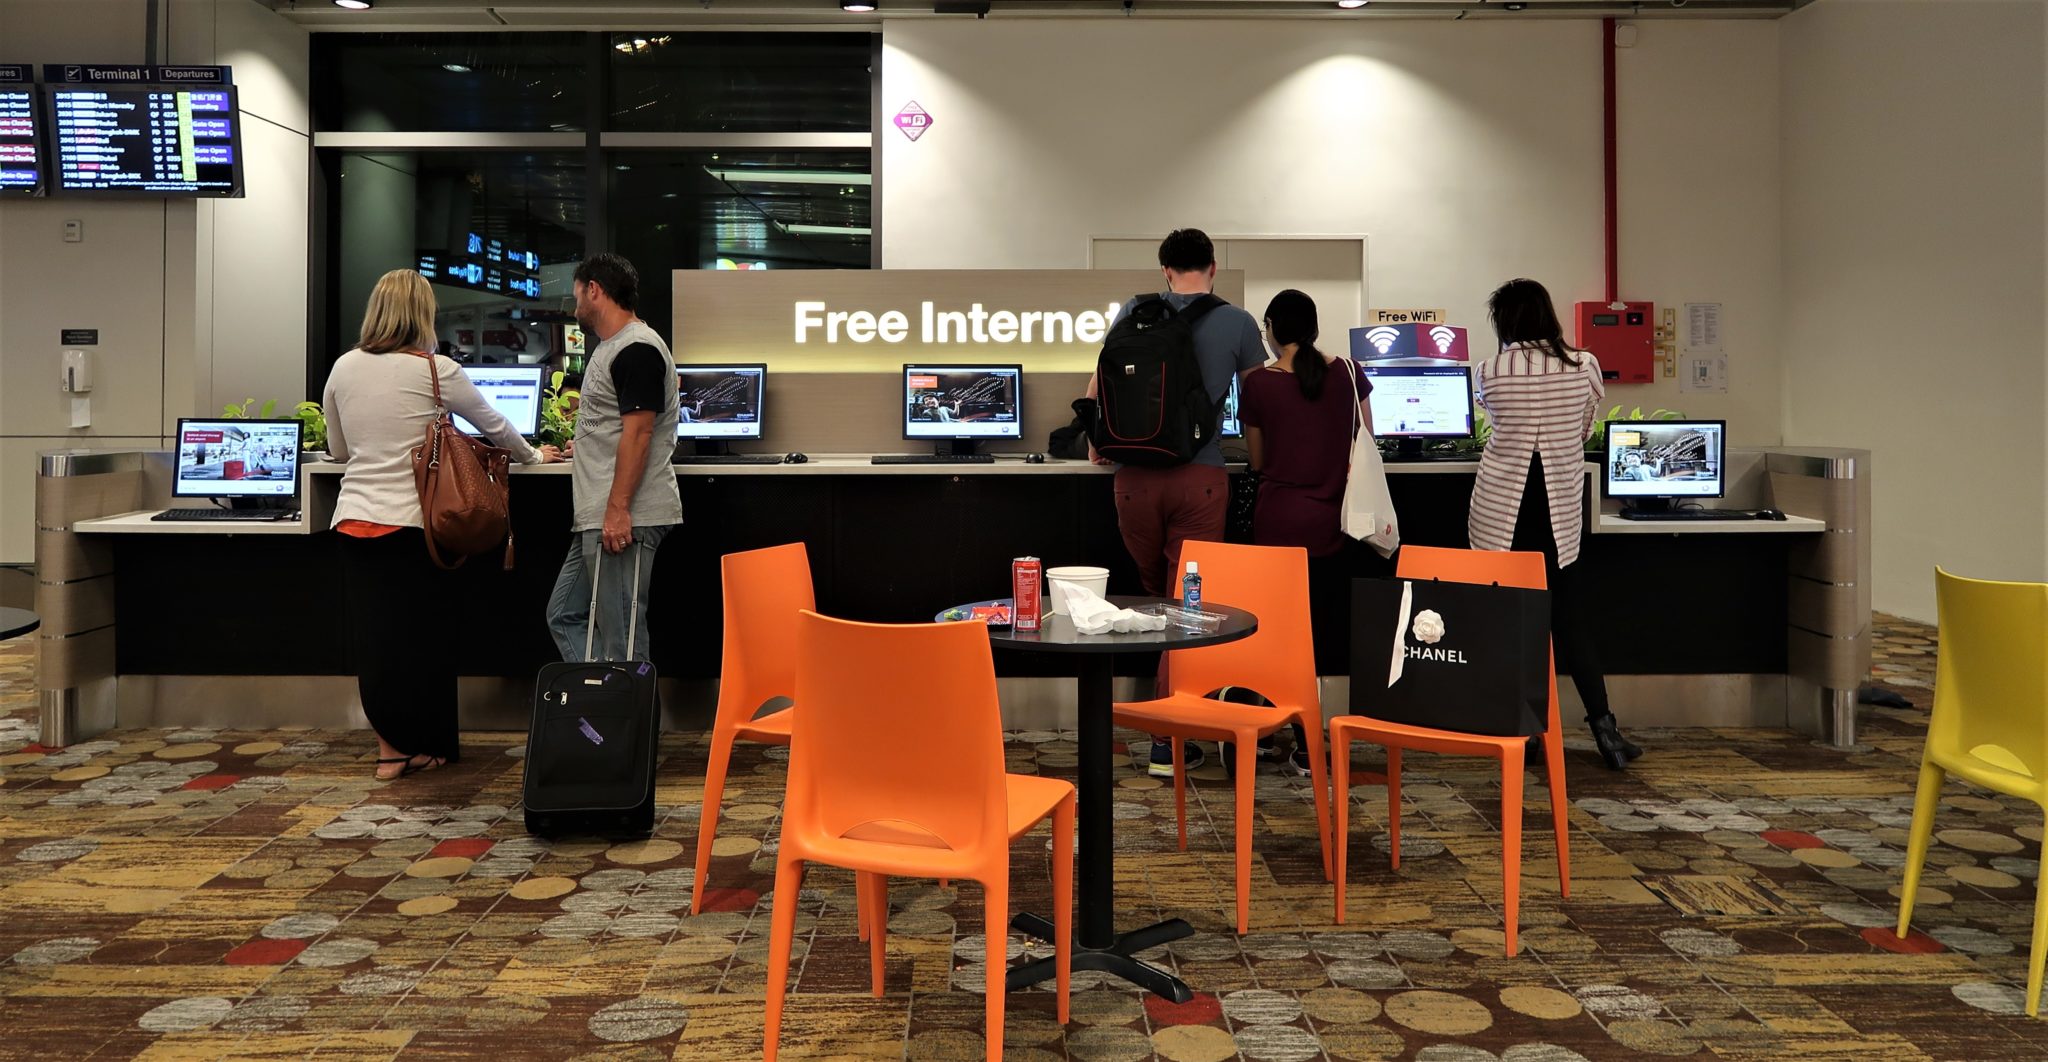 Singapore Changi Airport Internet